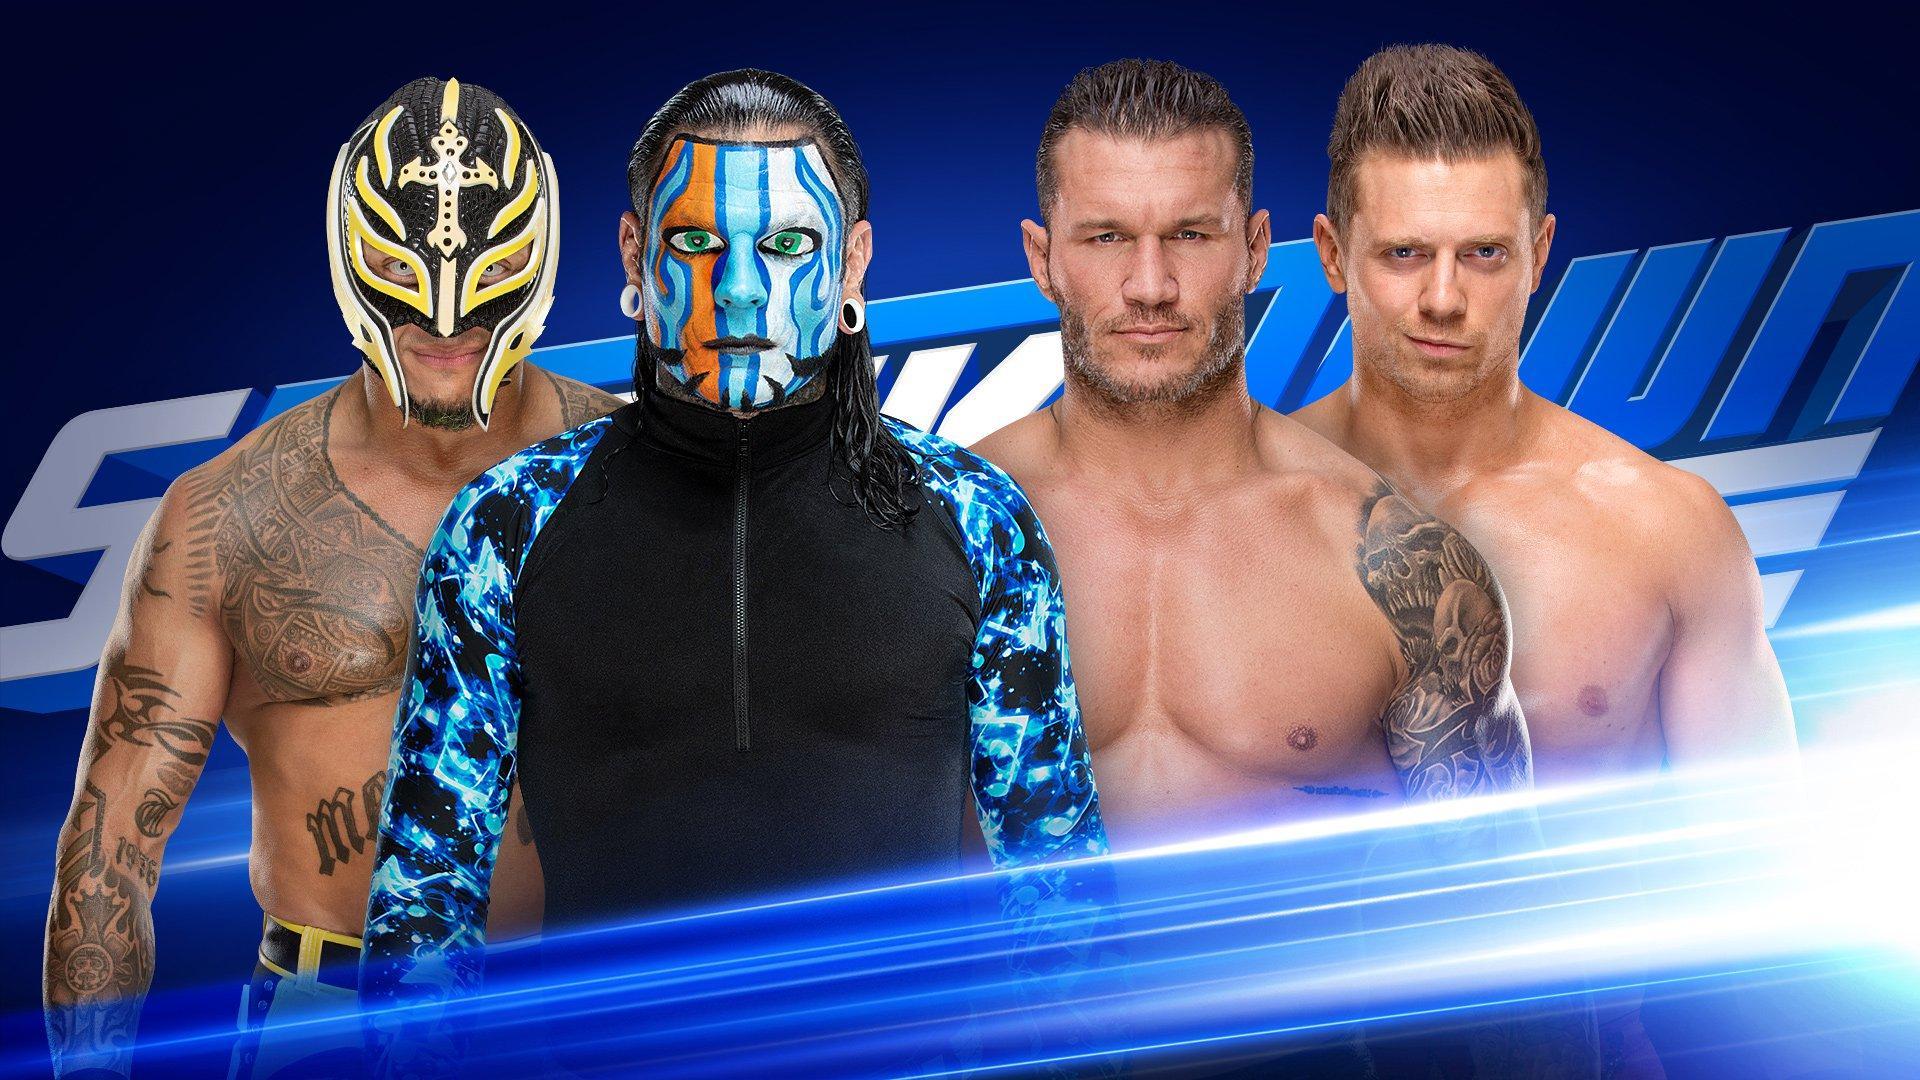 Mysterio & Hardy vs. Orton & Miz announced for WWE SmackDown